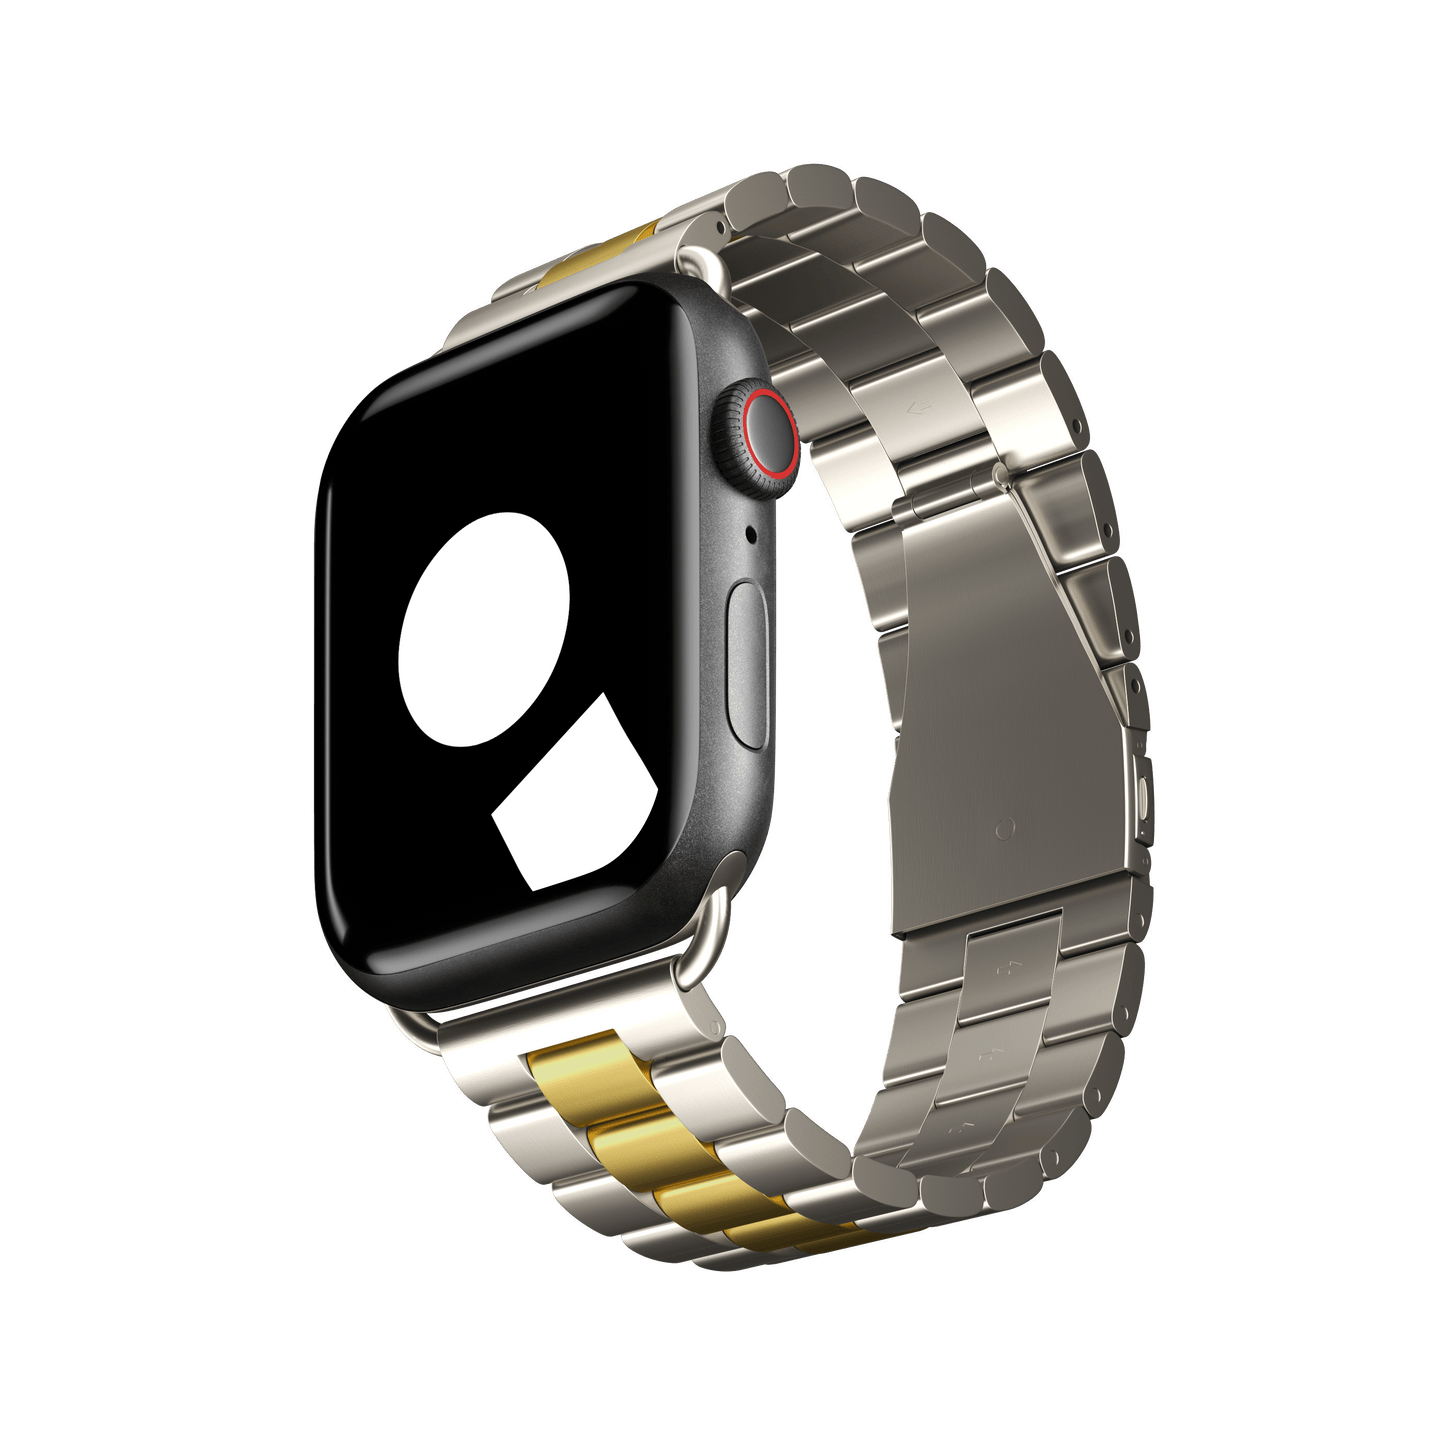 Silver/Gold Tri-Link Bracelet for Apple Watch